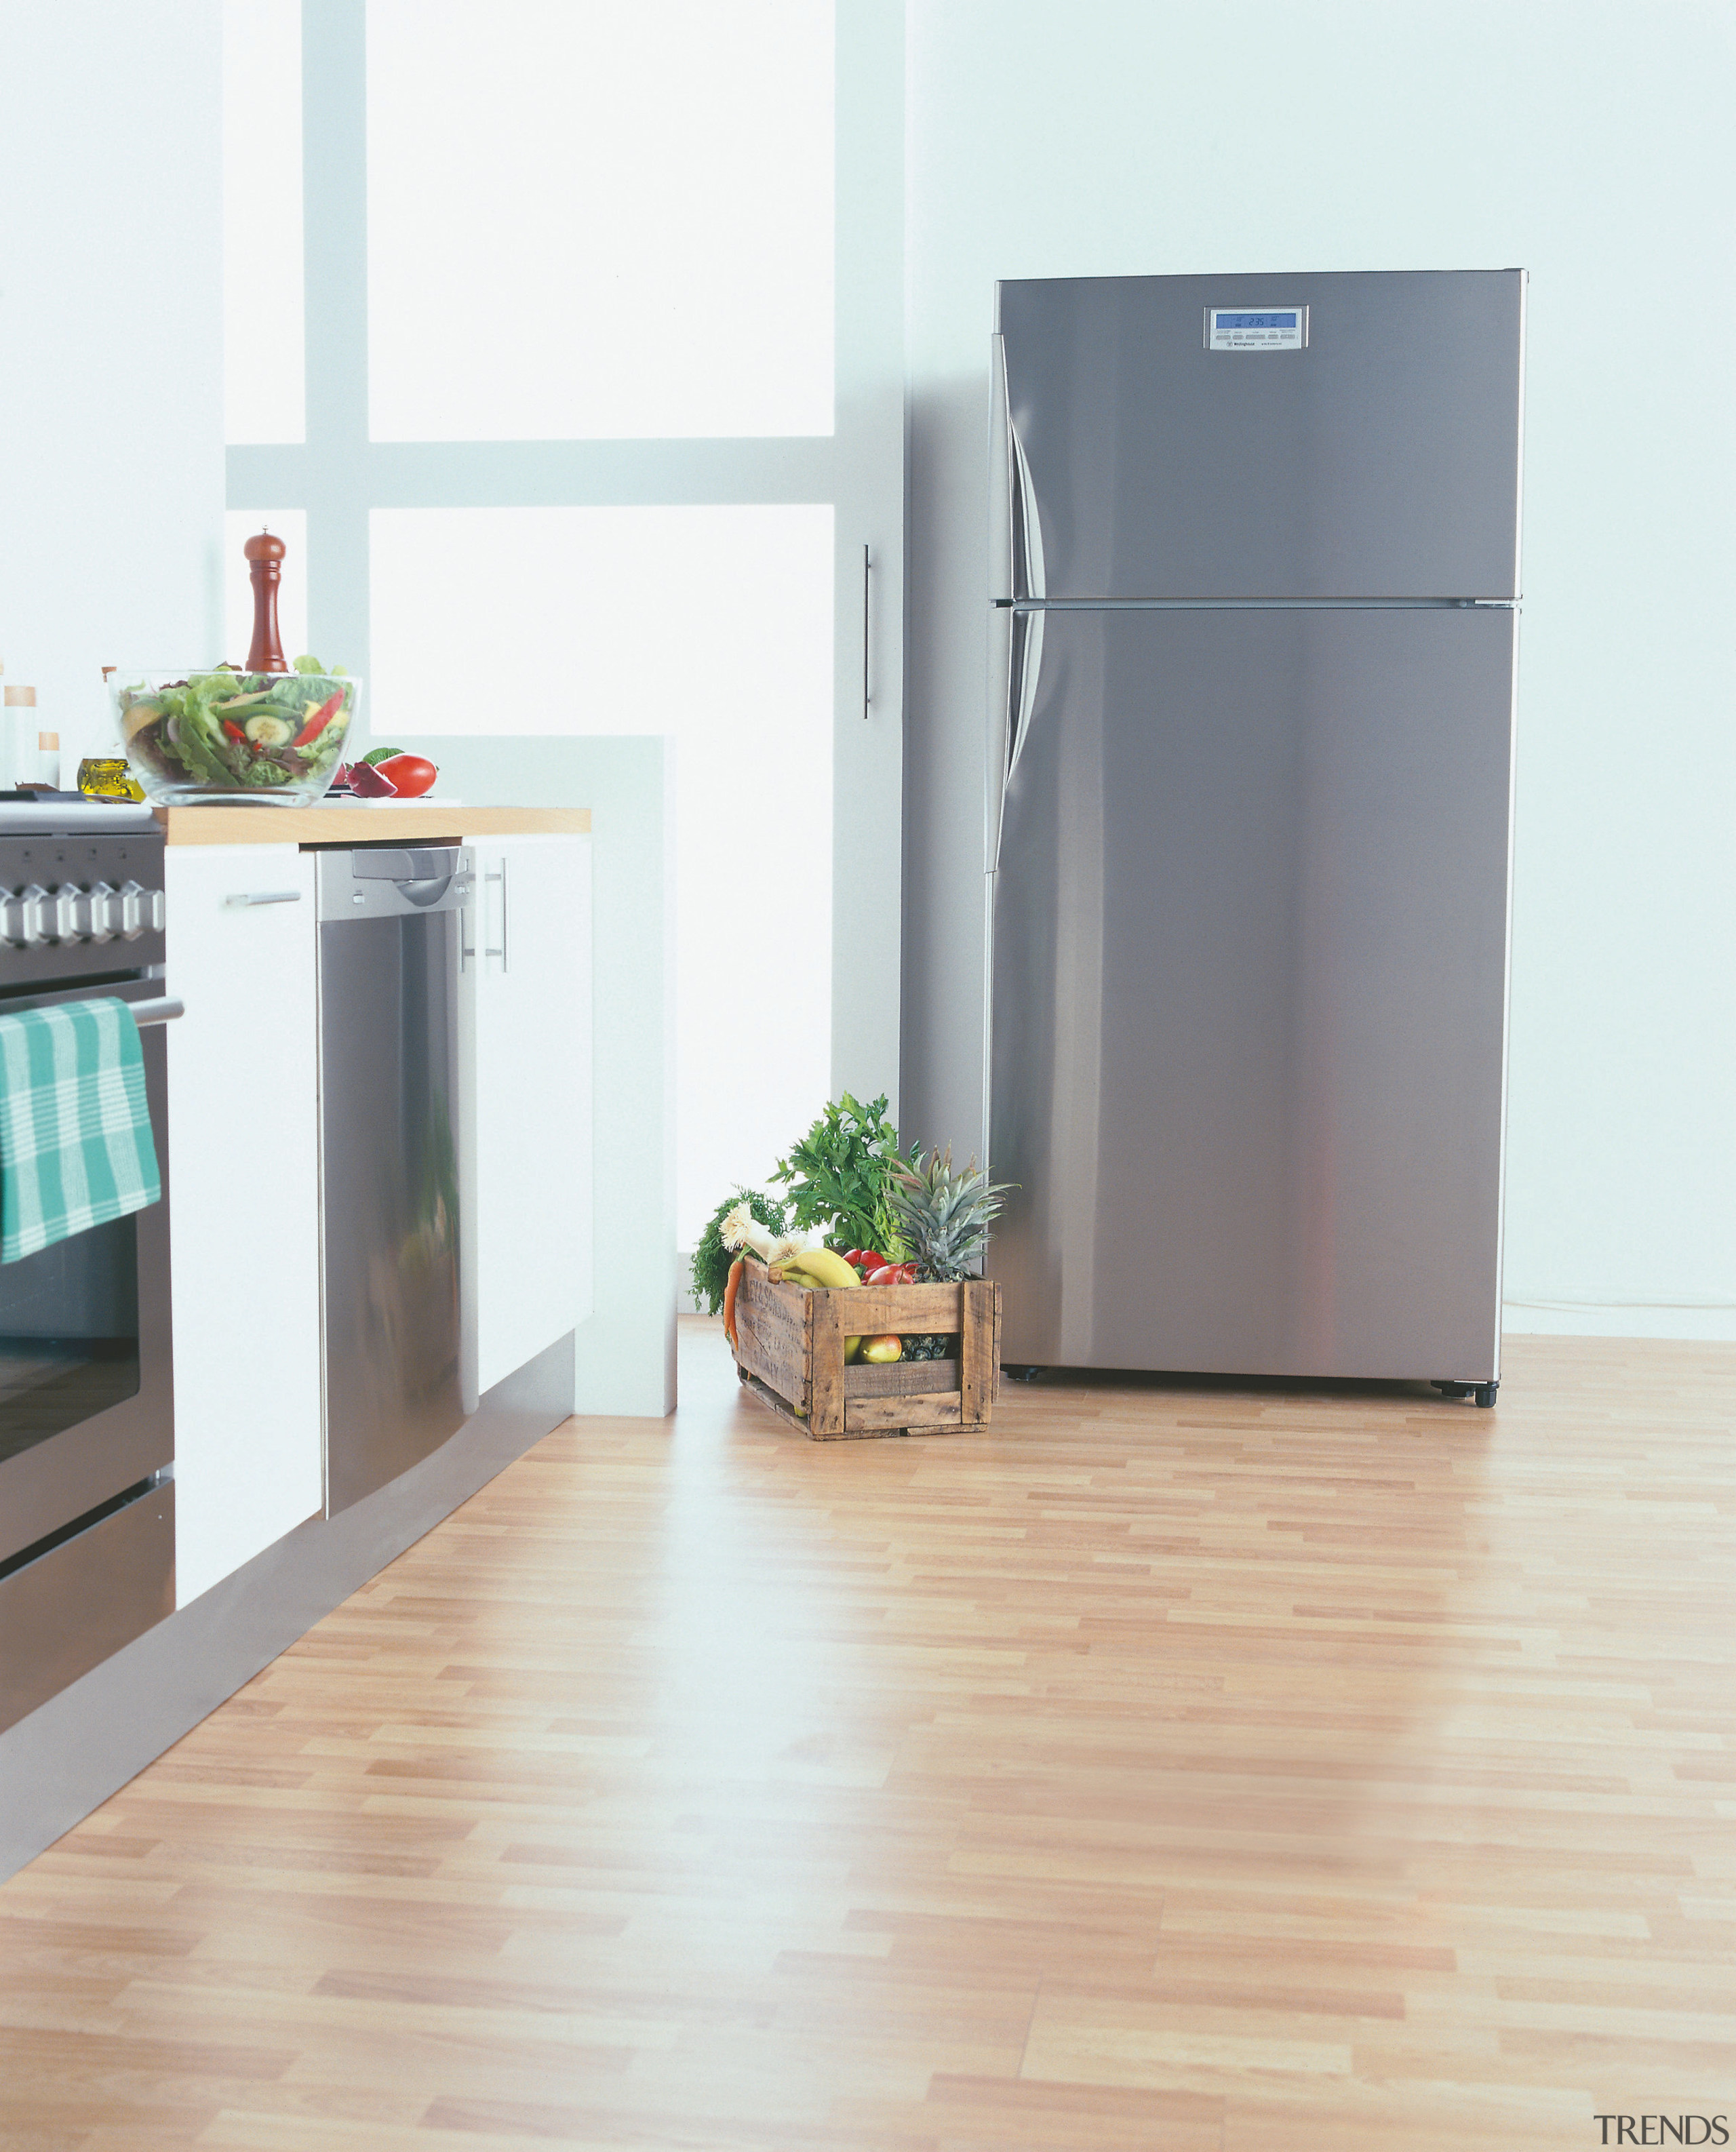 Stylish Refrigerator in kitchen setting. - Stylish Refrigerator floor, flooring, hardwood, home appliance, kitchen appliance, laminate flooring, major appliance, product, refrigerator, white, gray